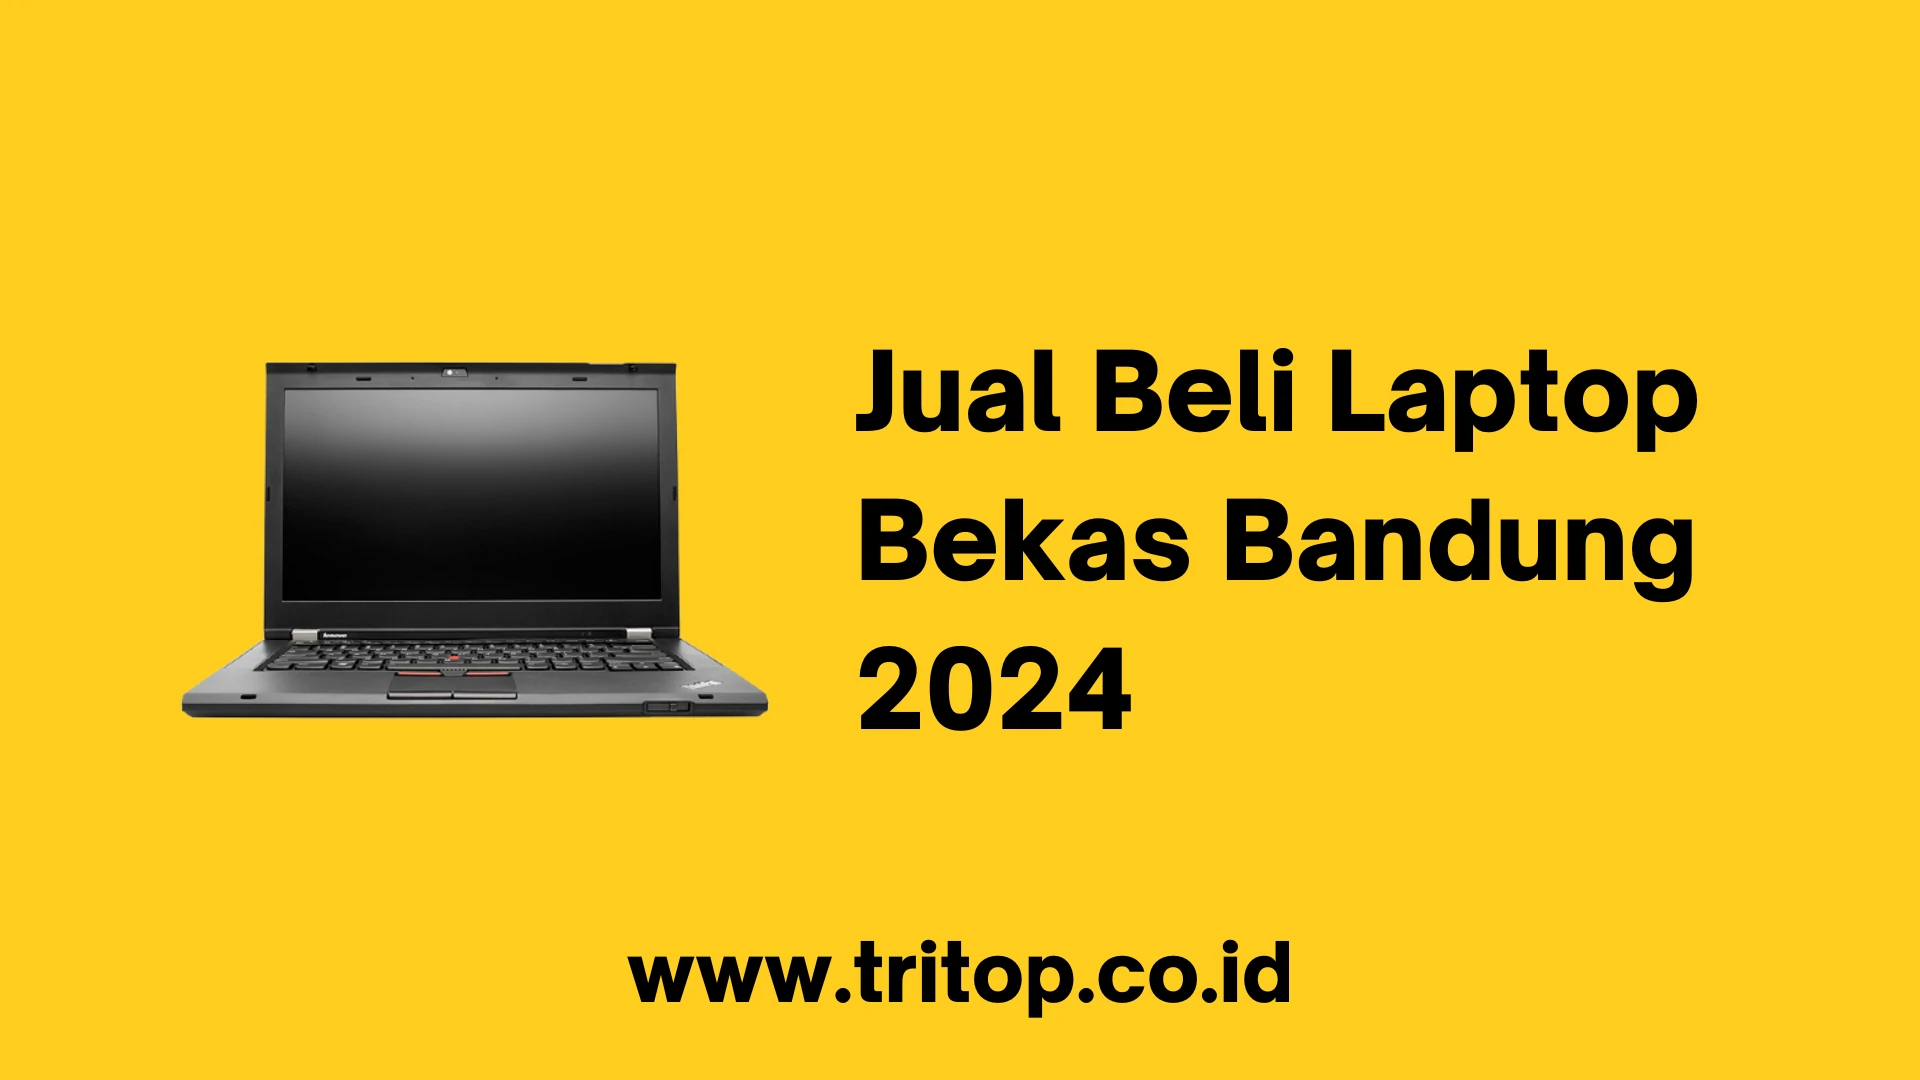 Jual Beli Laptop Bekas Bandung 2024